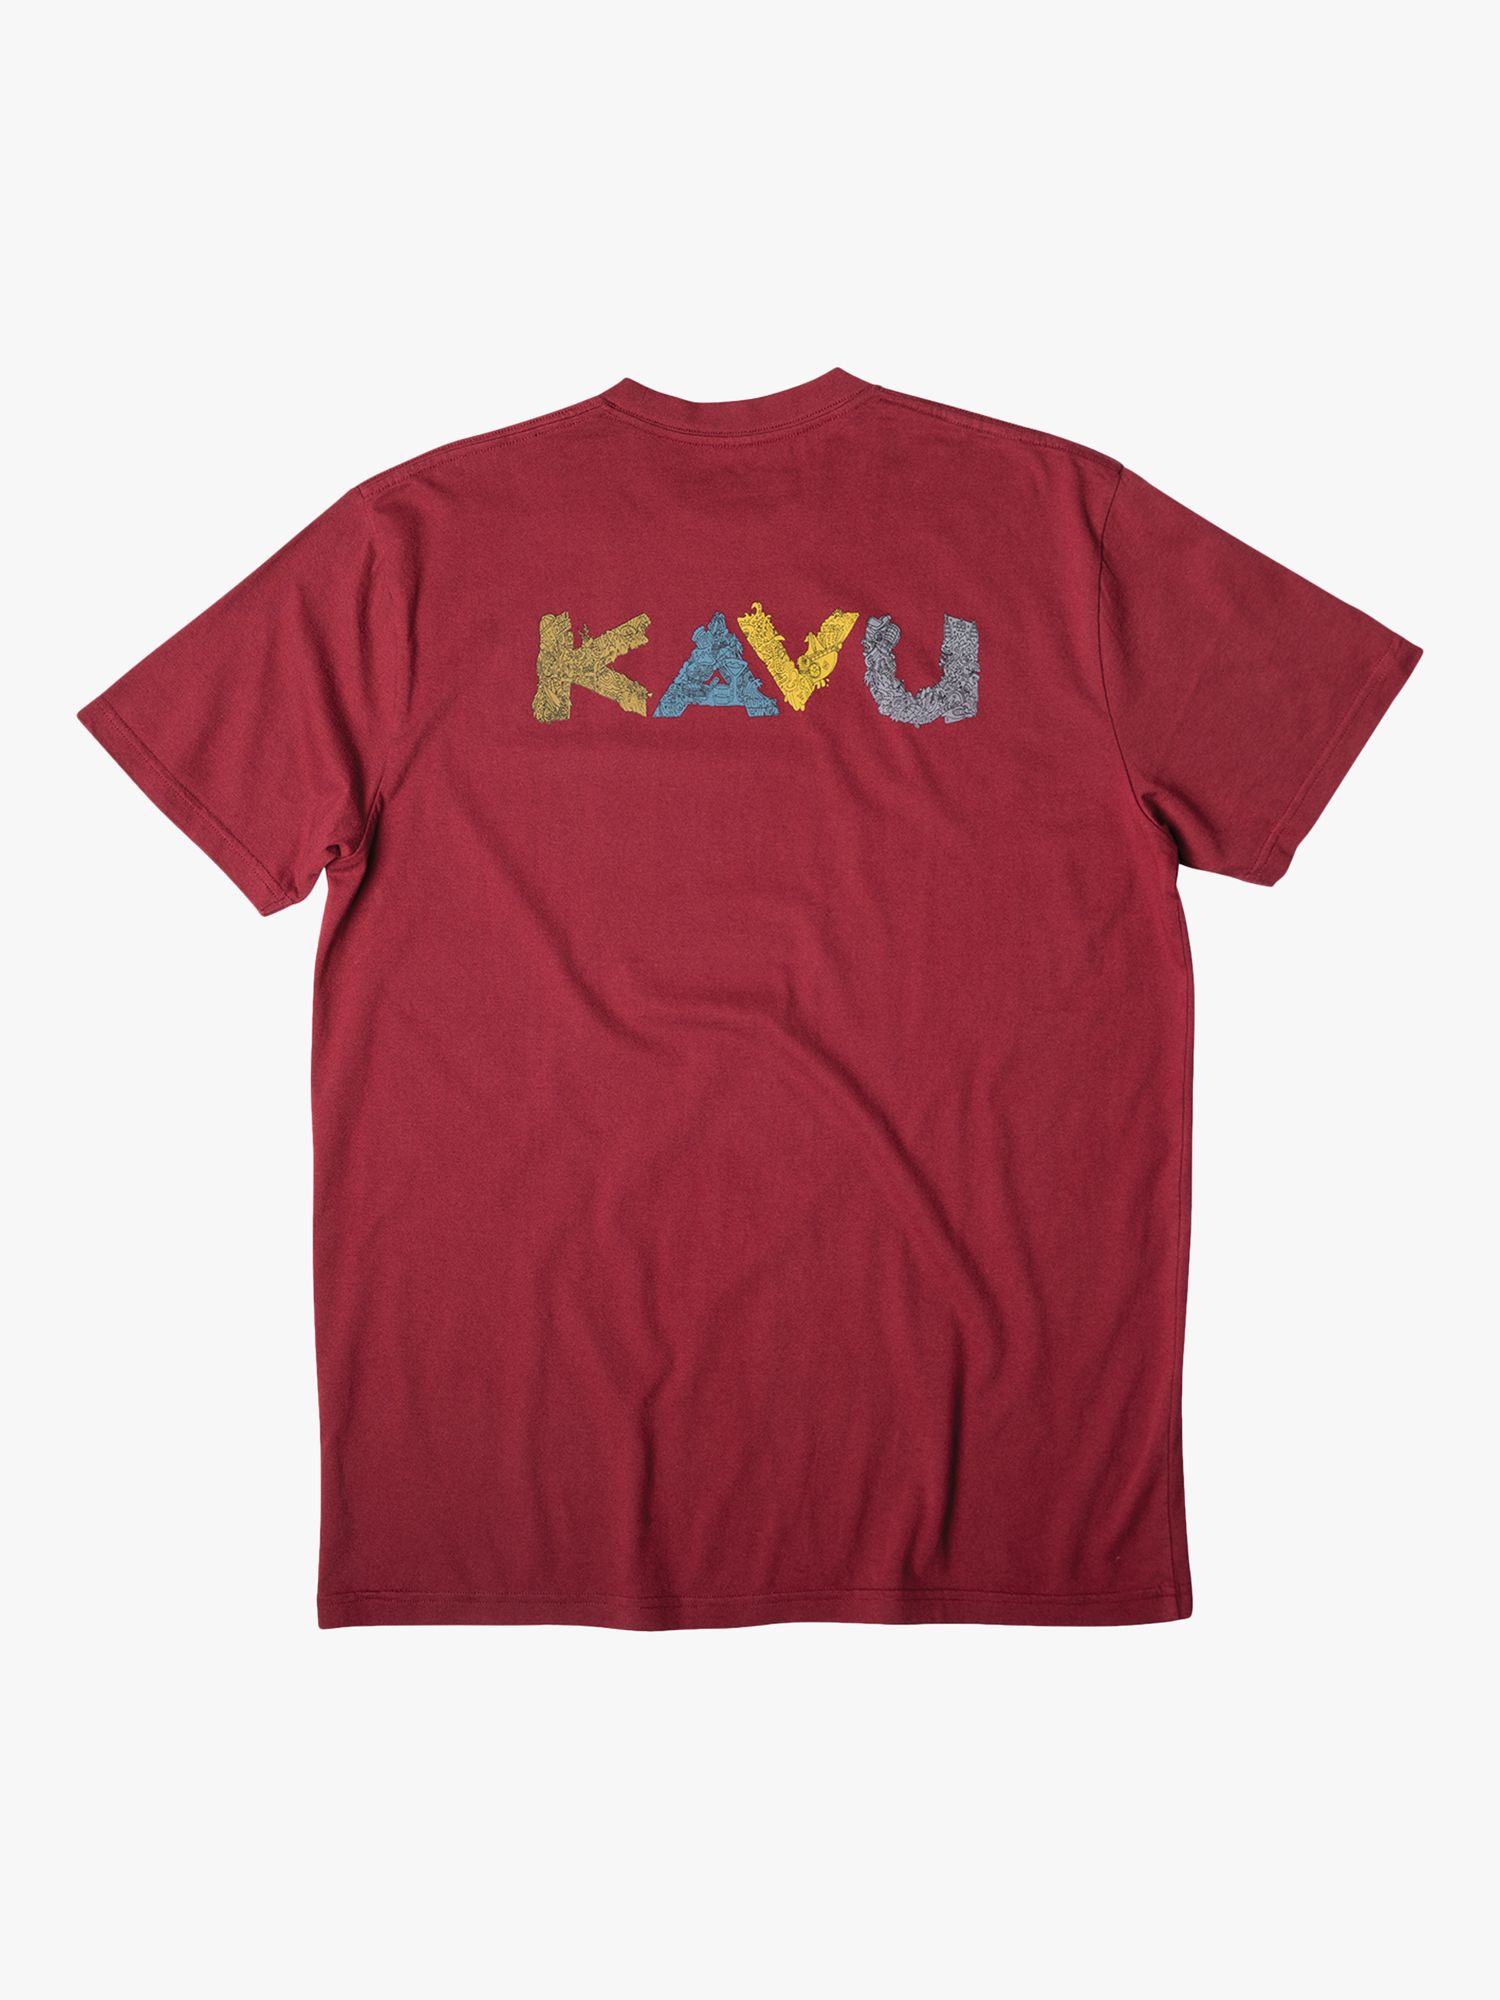 KAVU Doddle Days Organic Cotton Short Sleeve T-Shirt, Port, M